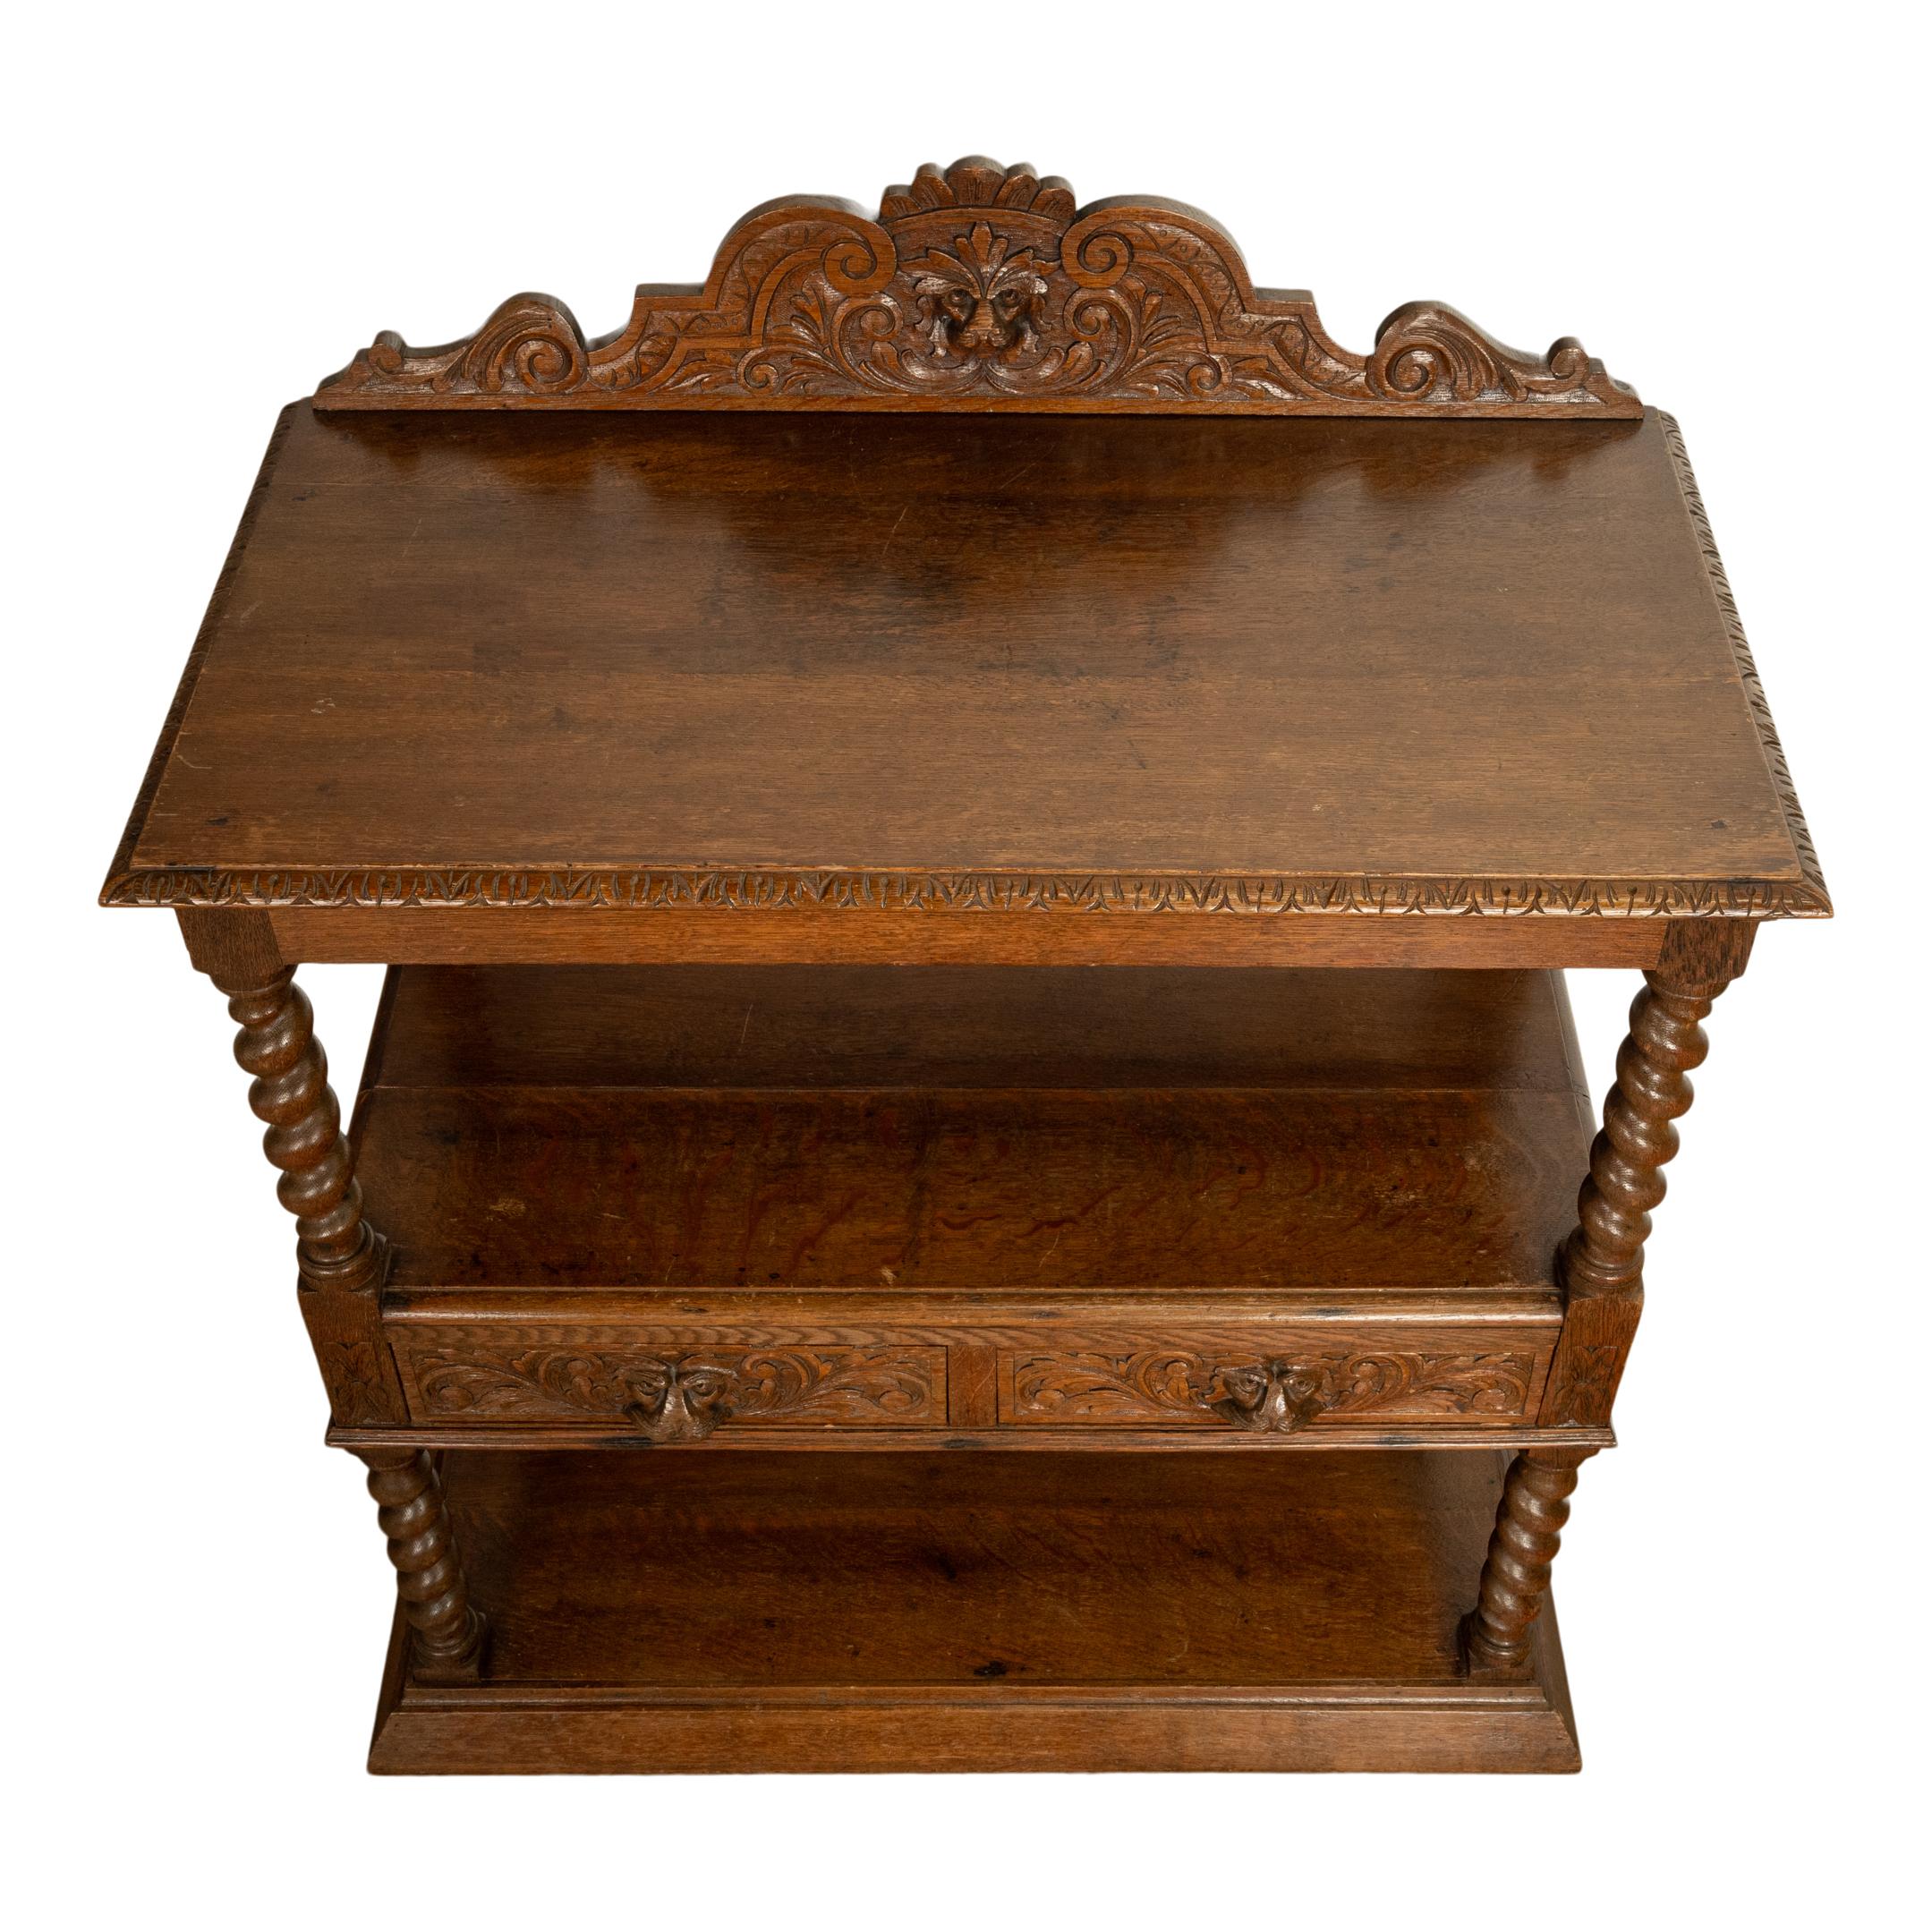 Antique French Renaissance Revival Carved Oak Barley Twist Server Buffet 1870 For Sale 5